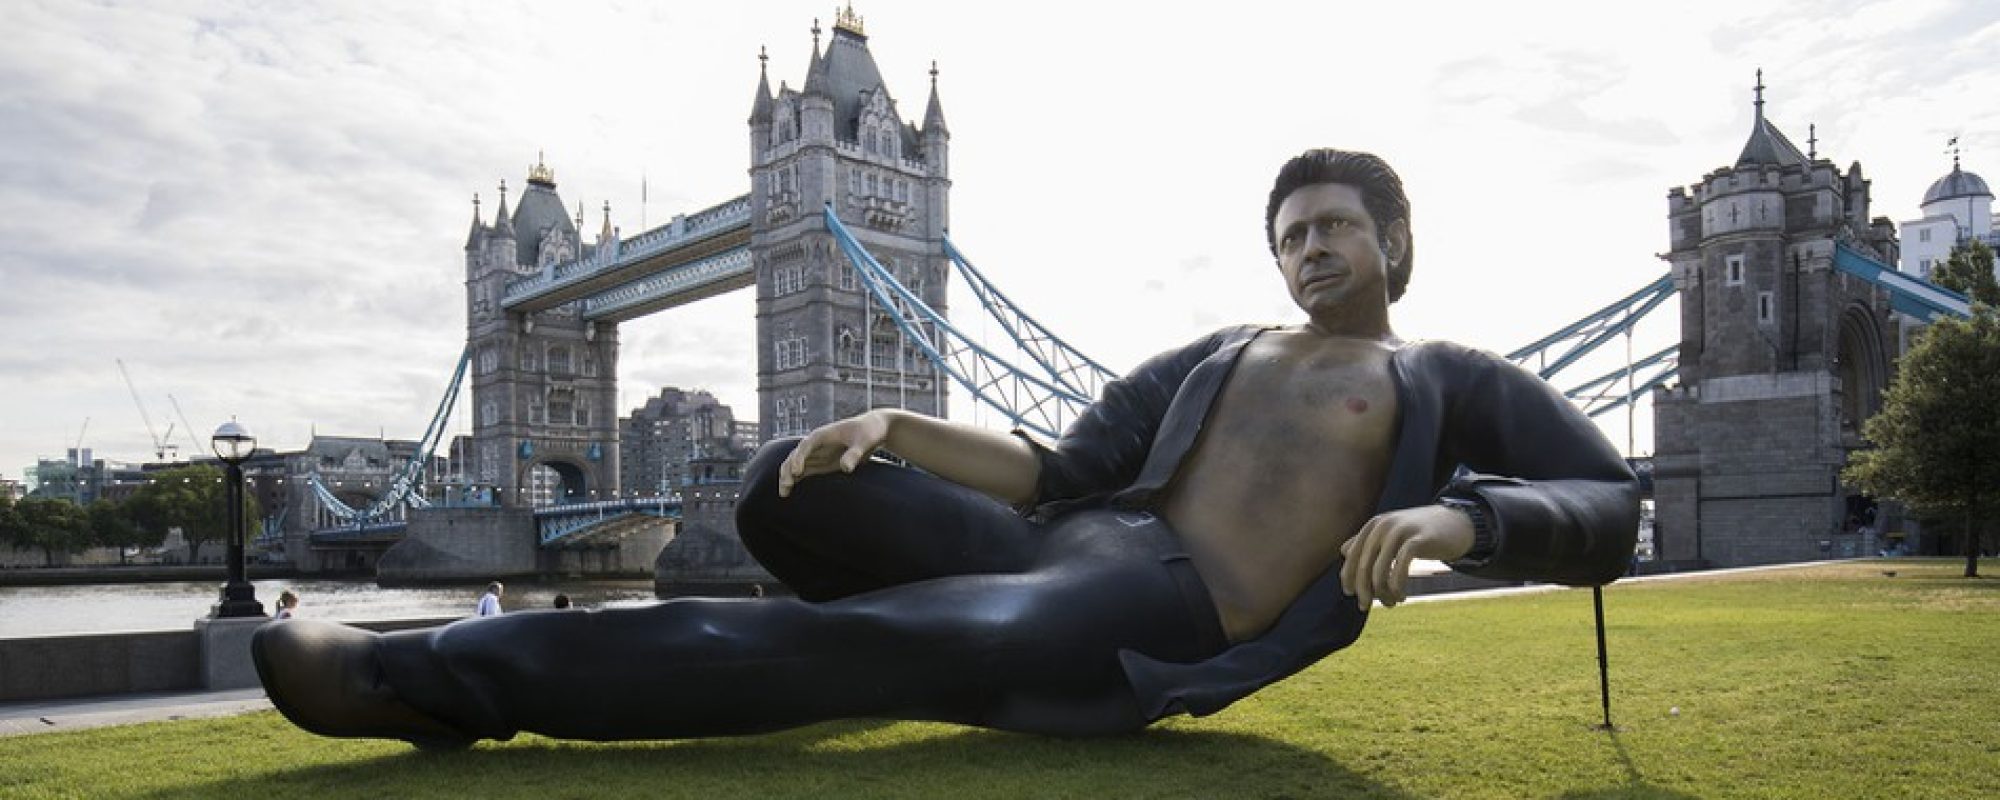 Giant Statue of Jeff Goldblum Erected in London